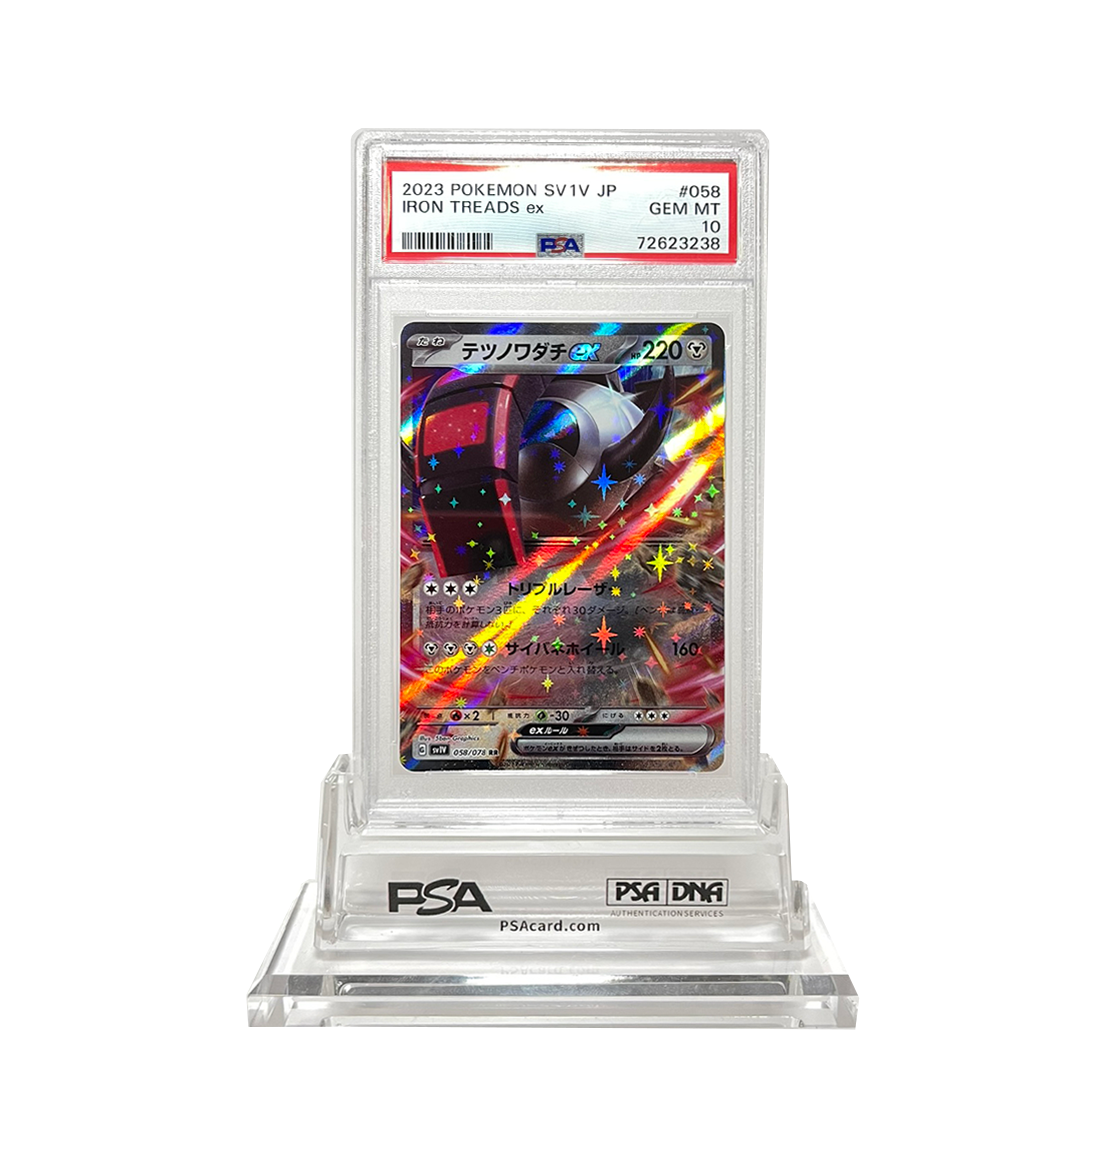 PSA 10 Iron Threads ex #058 Violet ex SV1V Japanese Pokemon card